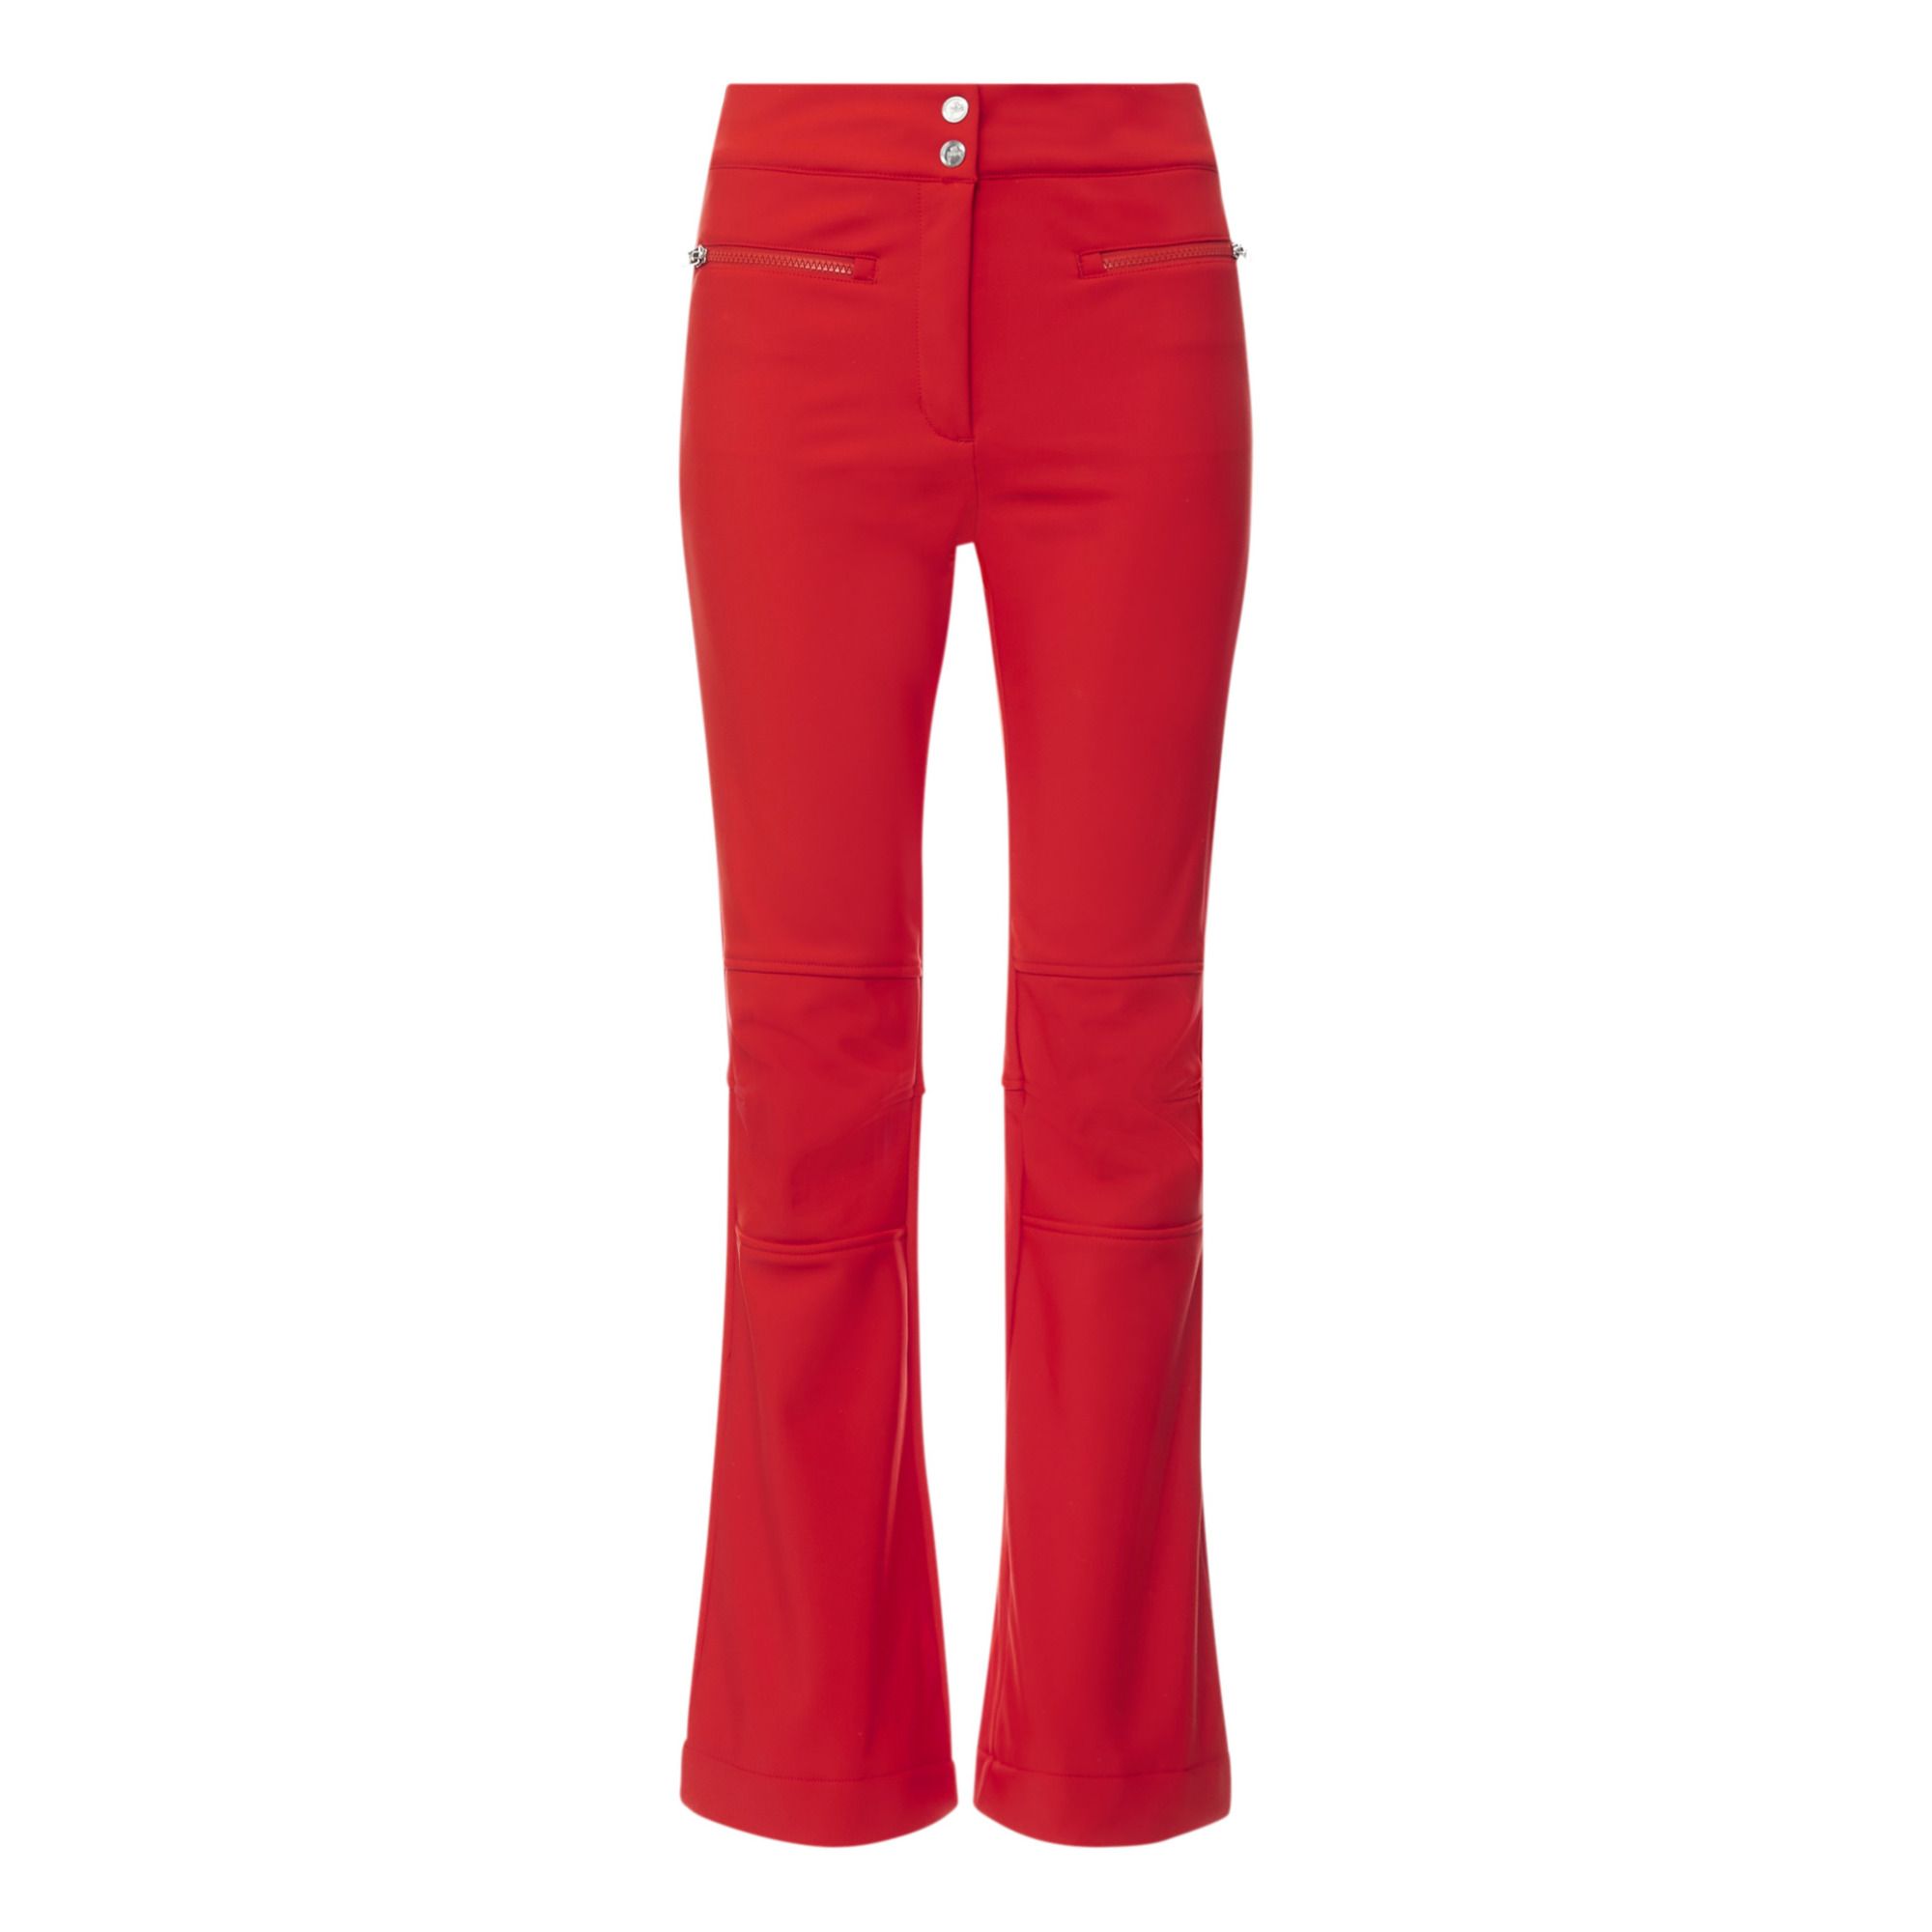 Fusalp - Pantalon de Ski Diana - Collection Femme - - Rouge